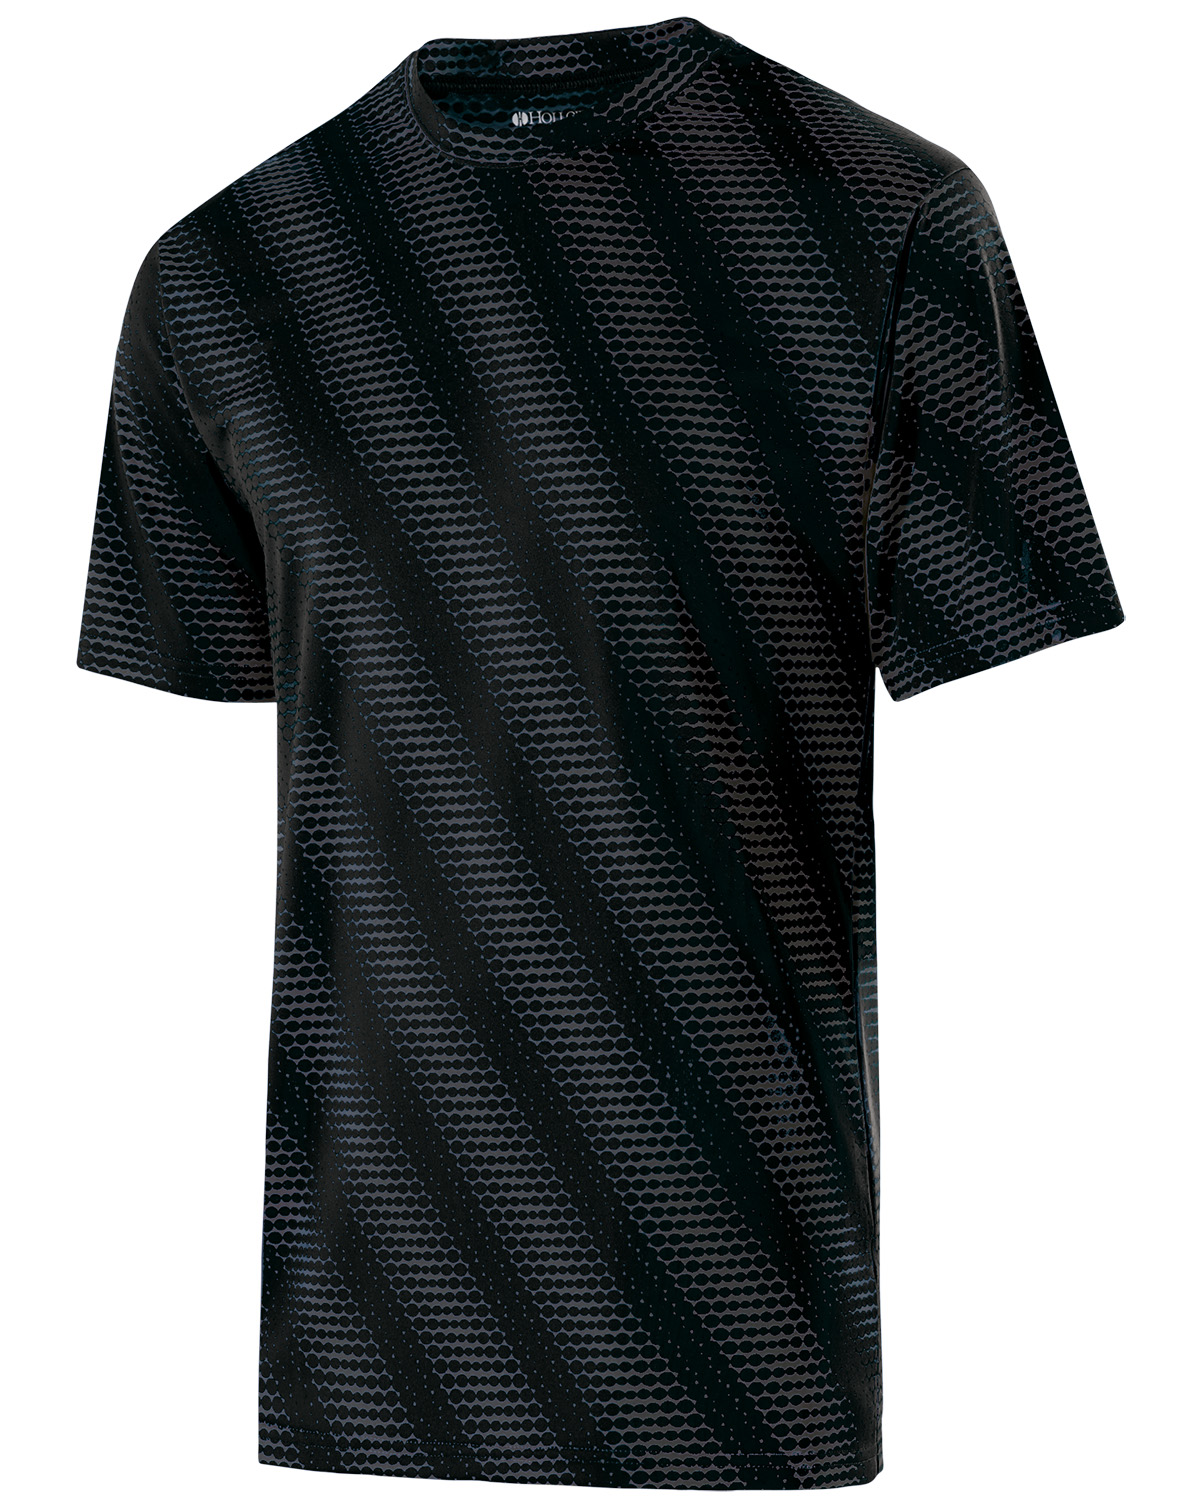 Holloway 222503 - Adult Polyester Short Sleeve Torpedo Shirt